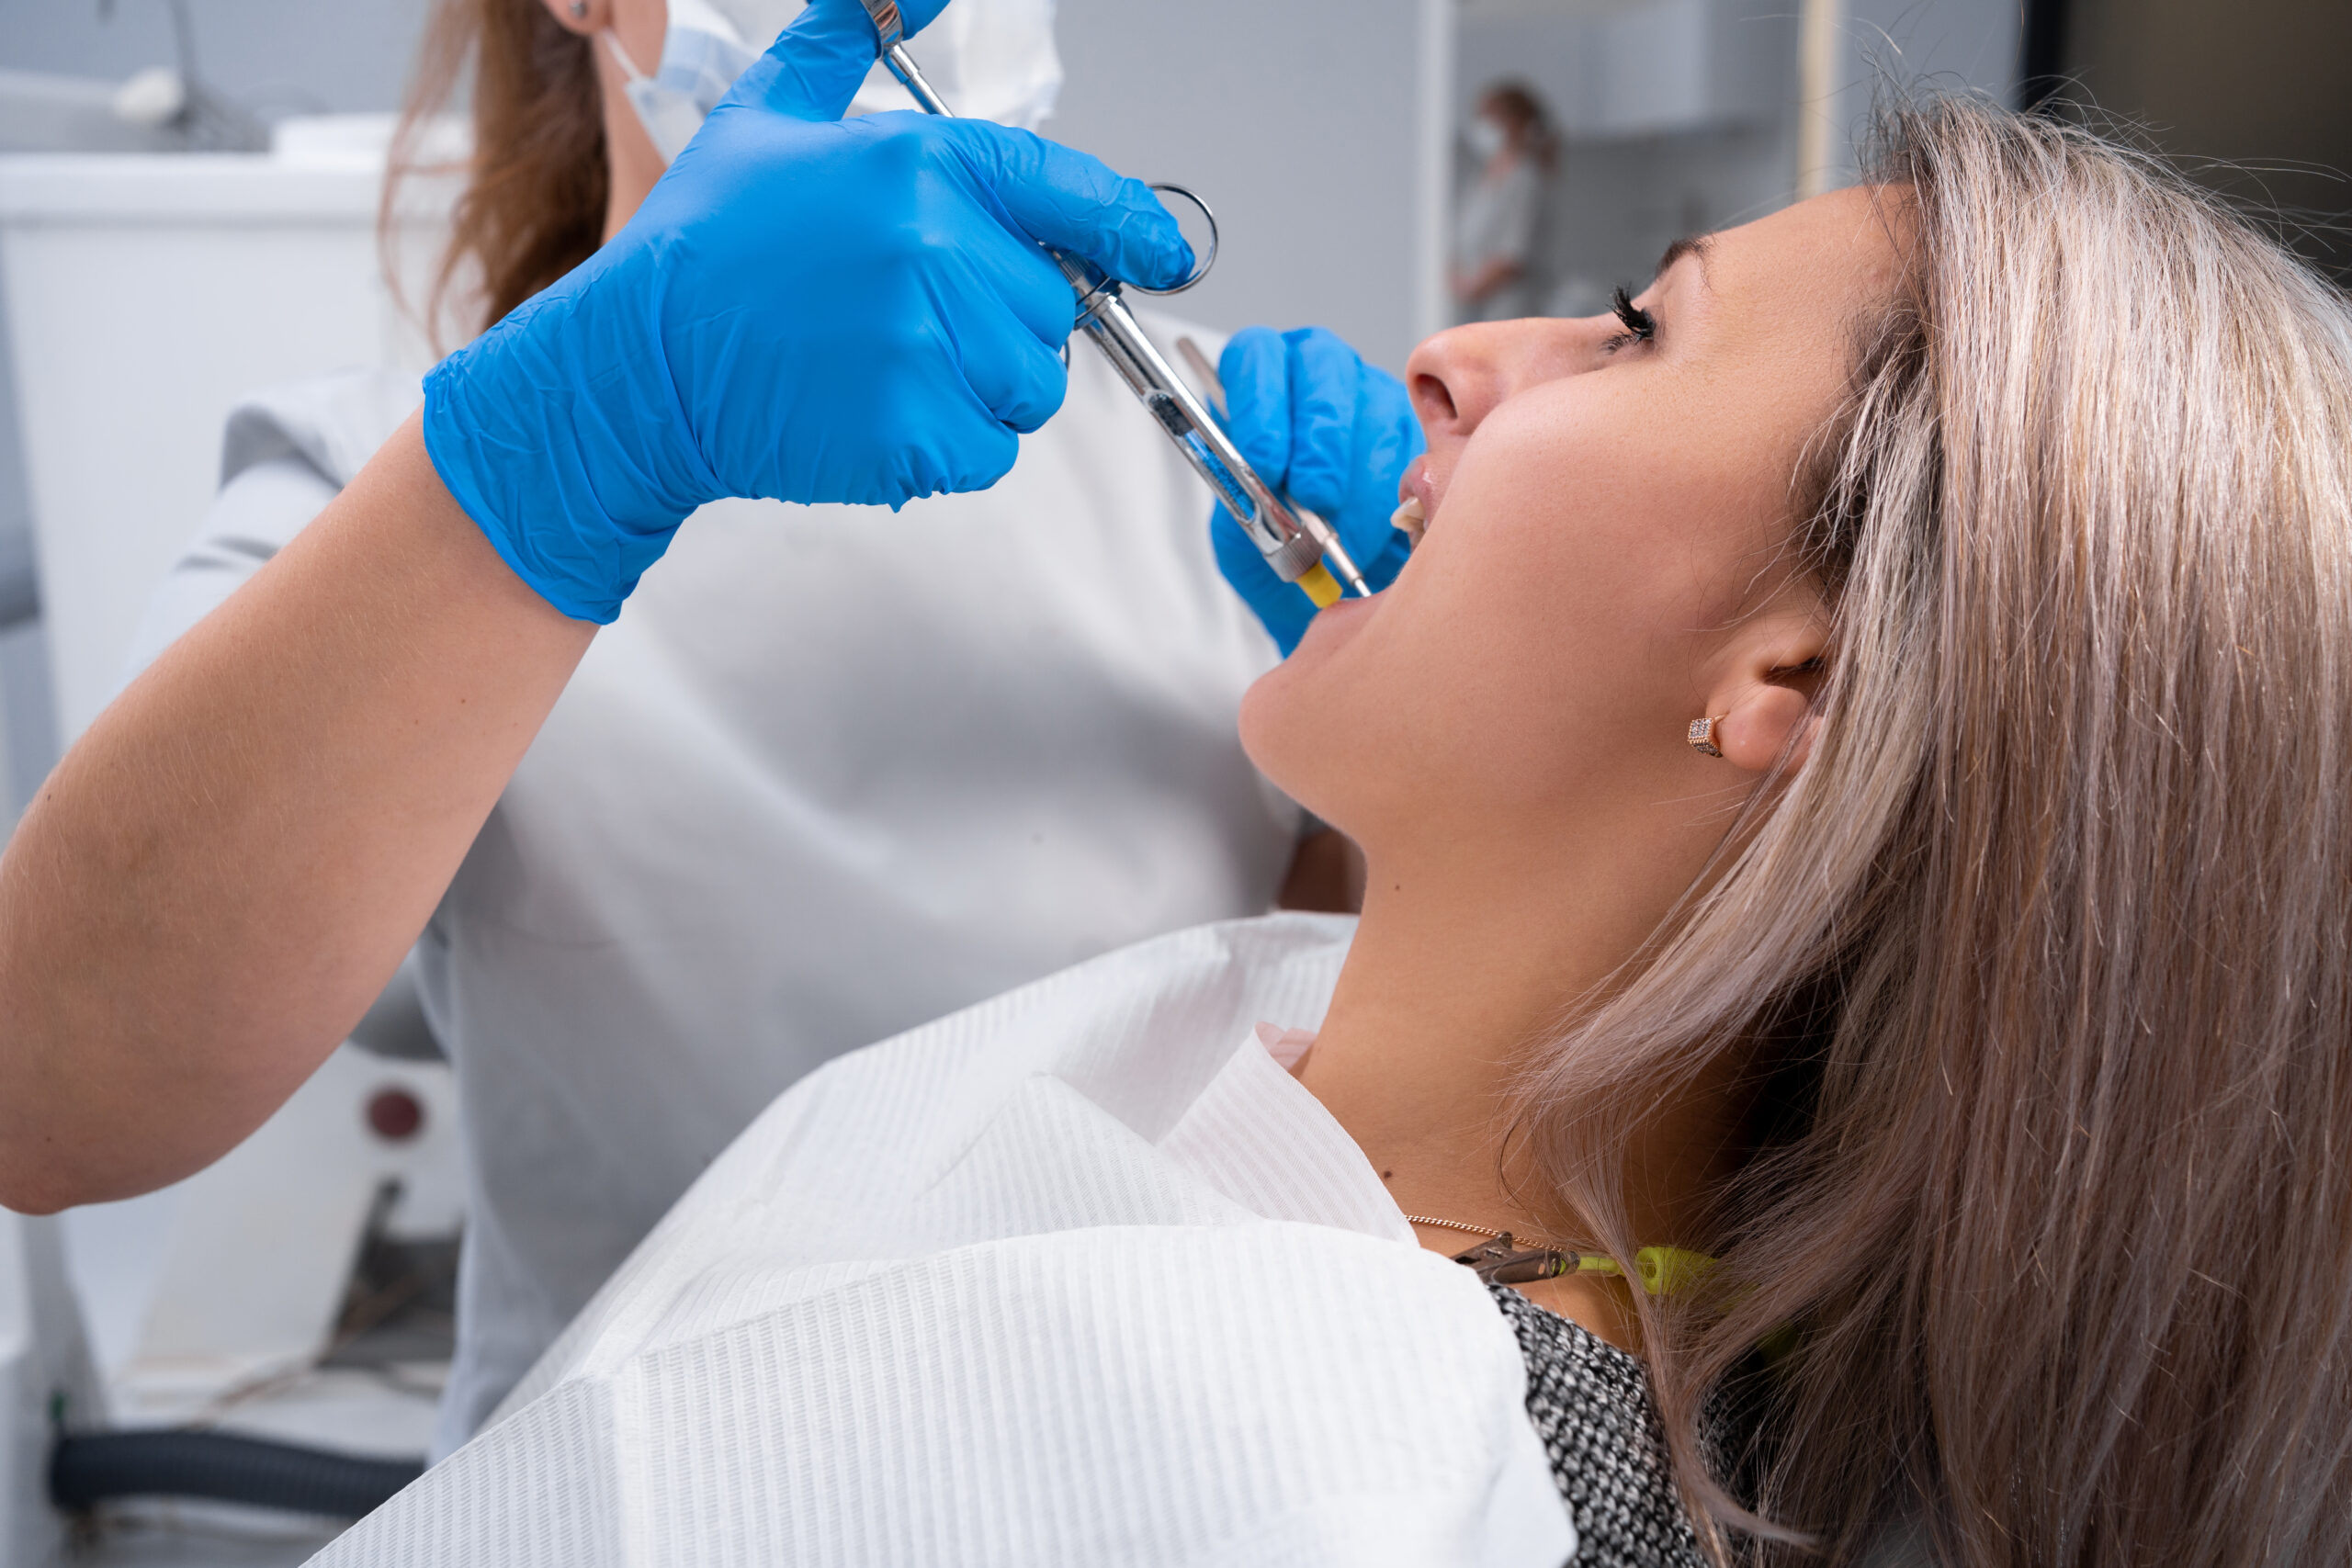 A woman receiving dental treatment with mandibular blocks.